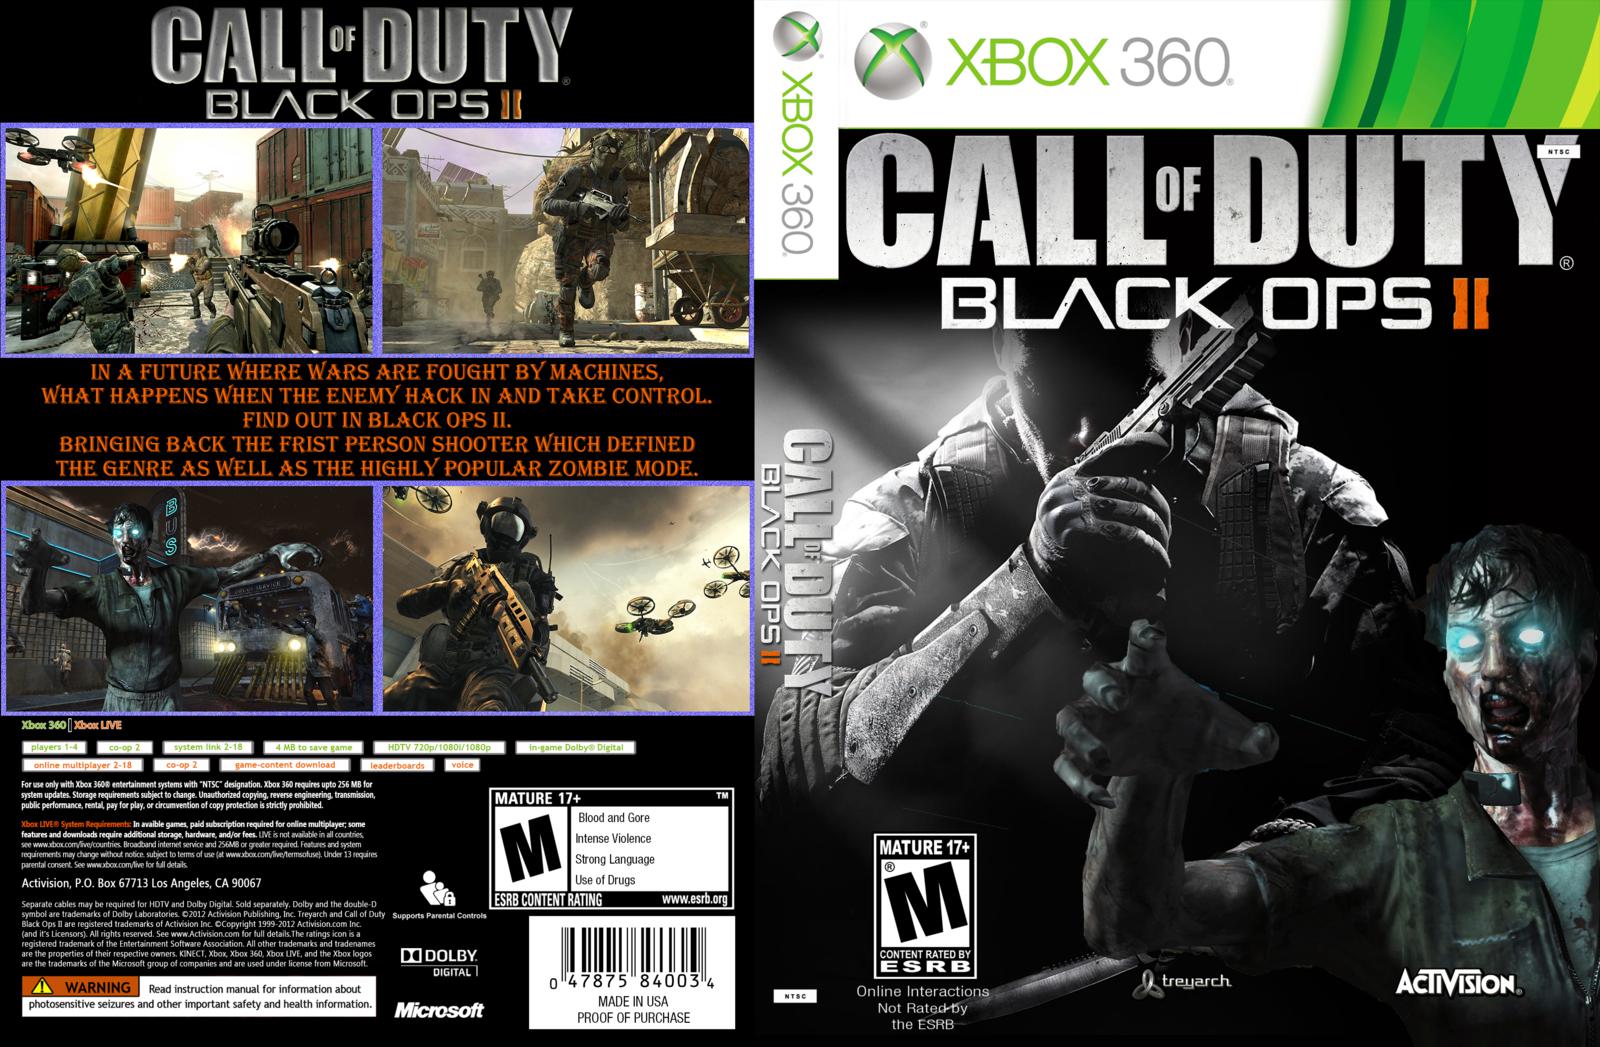 Игры на икс бокс 360 freeboot. Black ops Xbox 360 обложка. Black ops 2 Xbox 360 обложка. Cod Black ops 2 обложка Xbox 360. Call of Duty Black ops II Xbox 360.